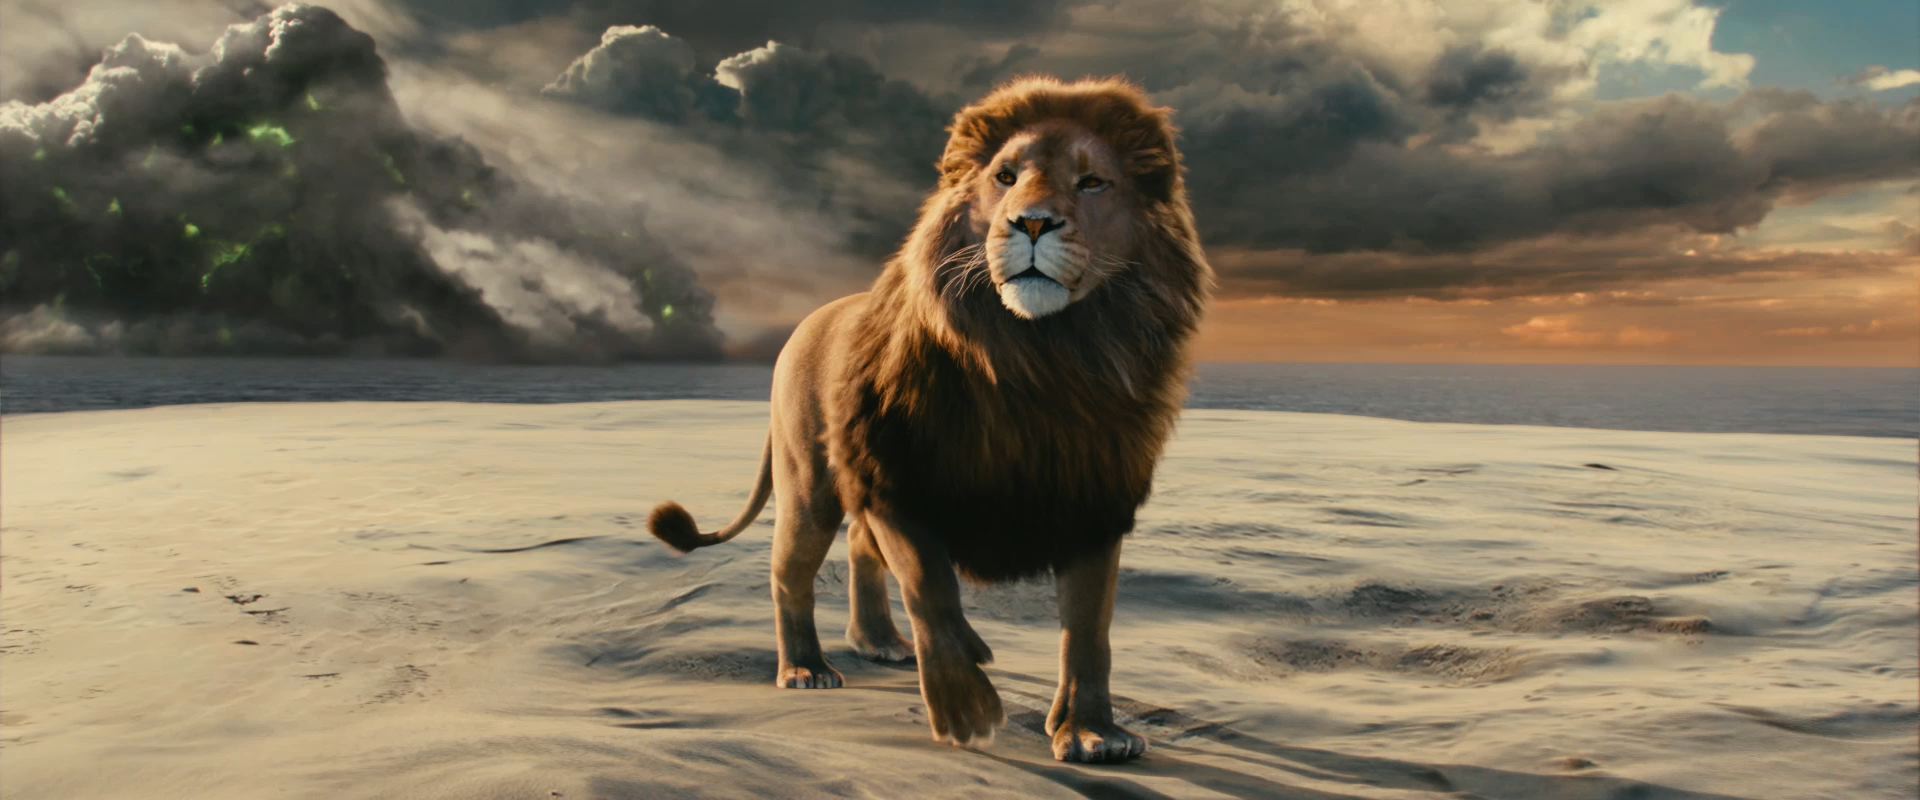 Aslan Lion Chronicles Of Narnia Voyage The Dawn Treader Wallpaper